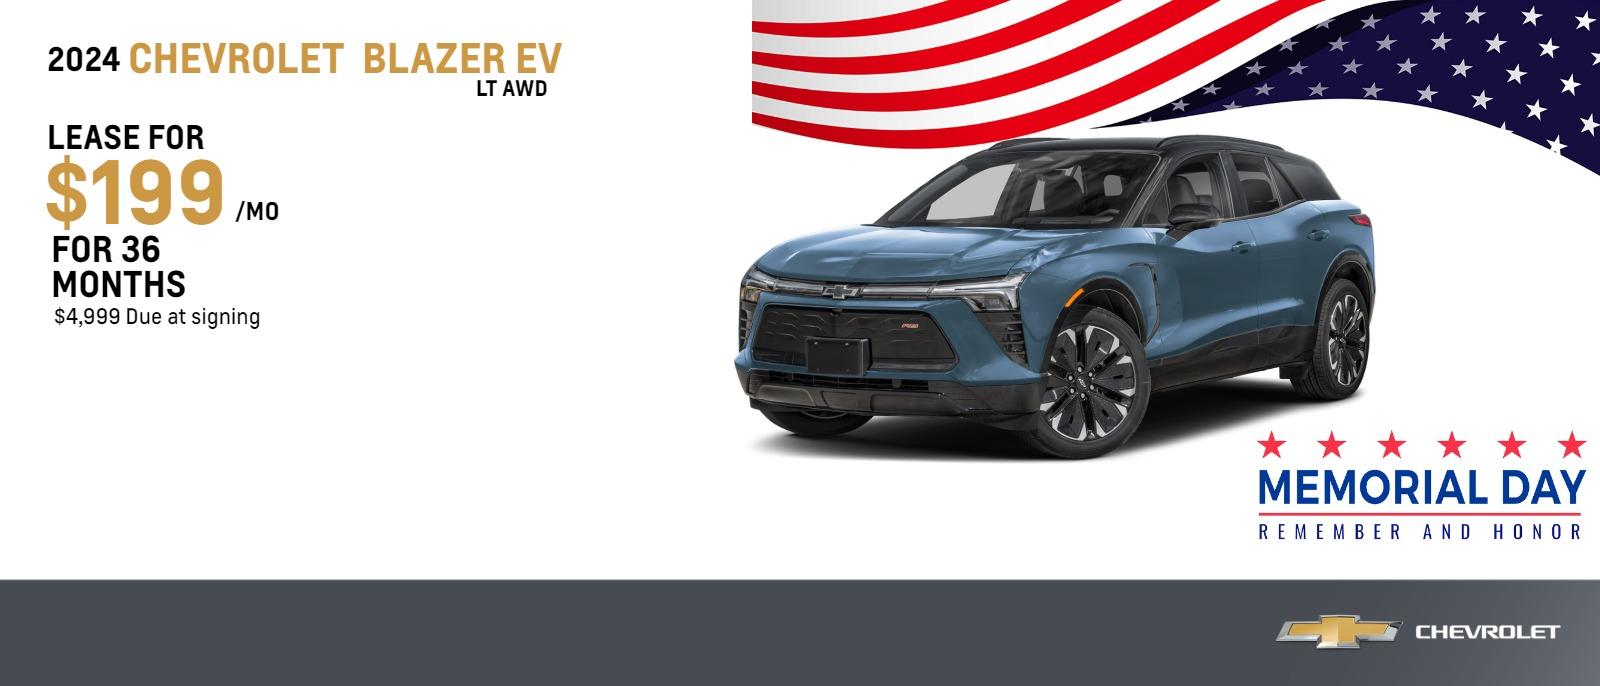 2024 Chevrolet Blazer EV LT AWD
$199 Month Lease | 36 Months | $4999 Due at signing